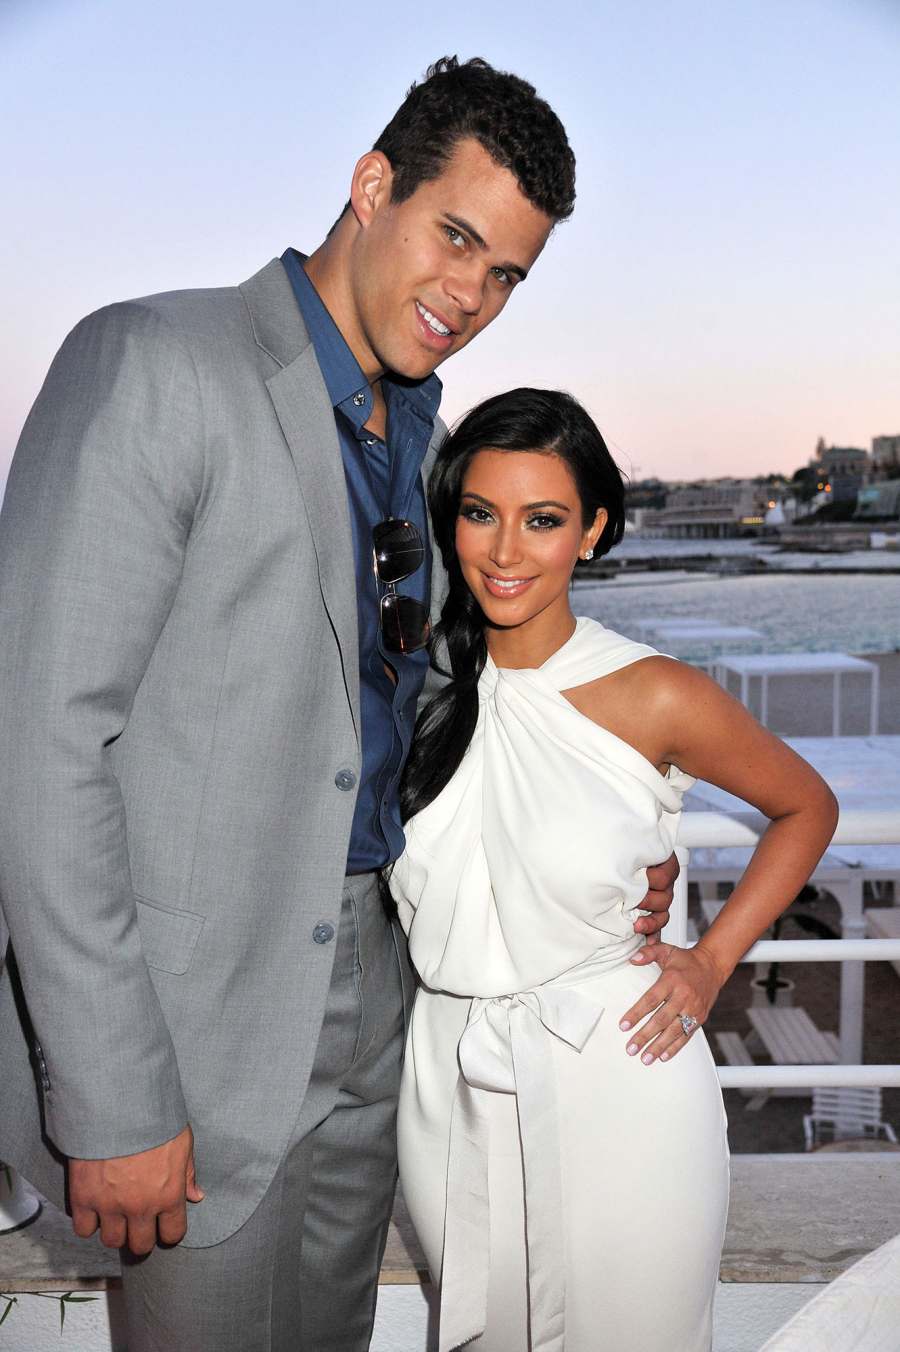 Engaged Kim Kardashian and Kris Humphries Relationship Timeline